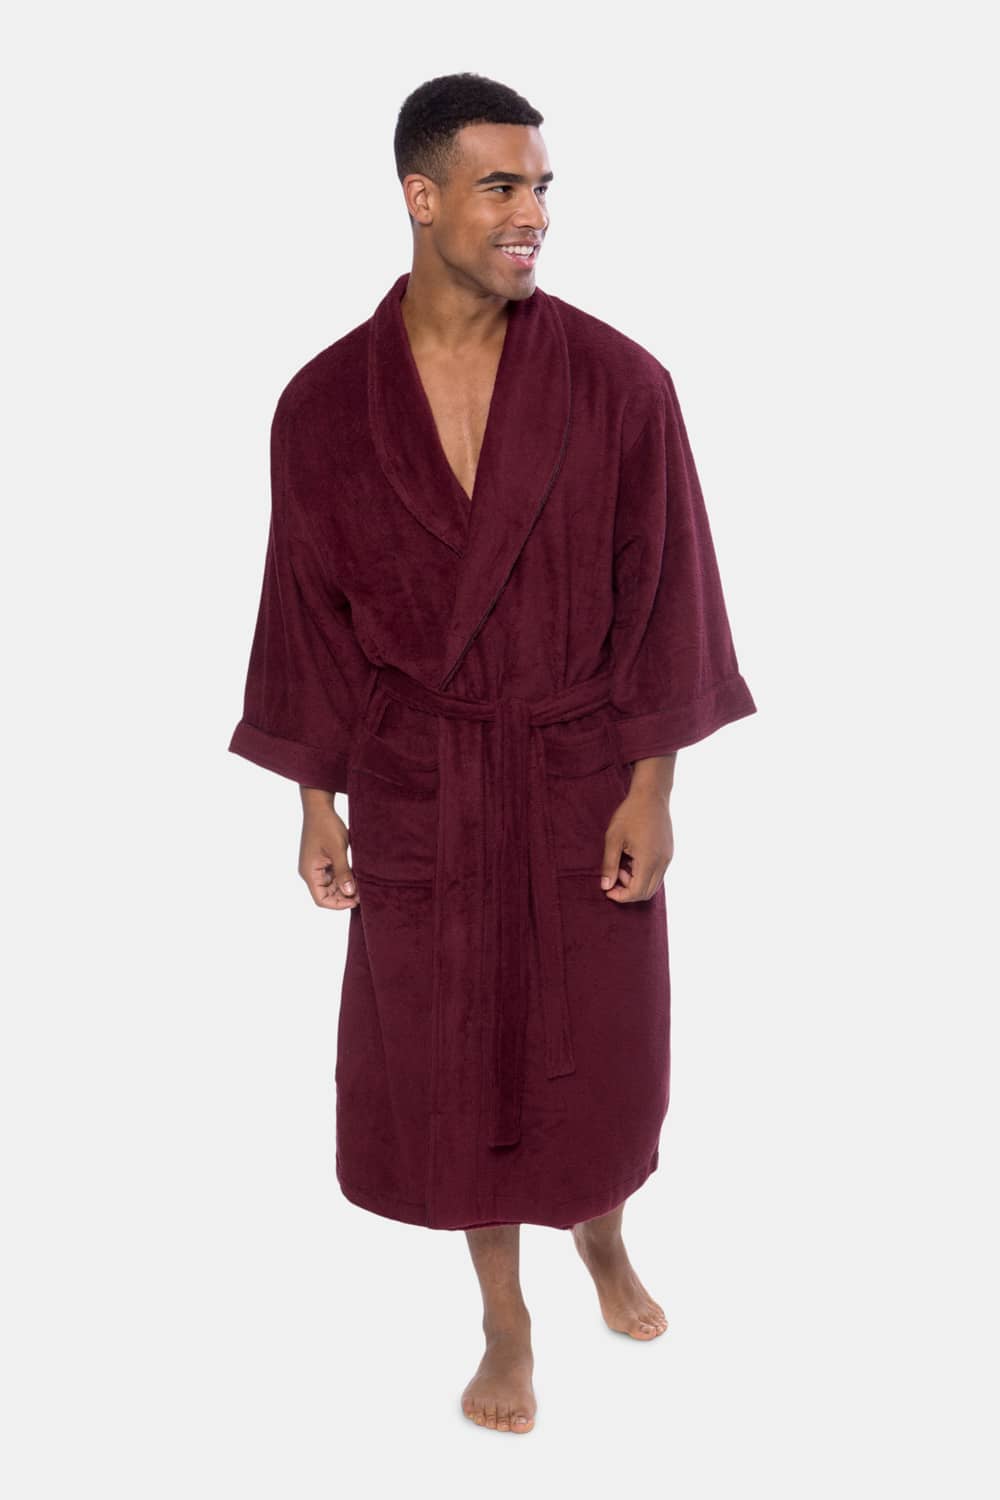 Texere Men's Terry Cloth Bathrobe Mens>Sleepwear>Robe Fishers Finery Burgundy S/M 